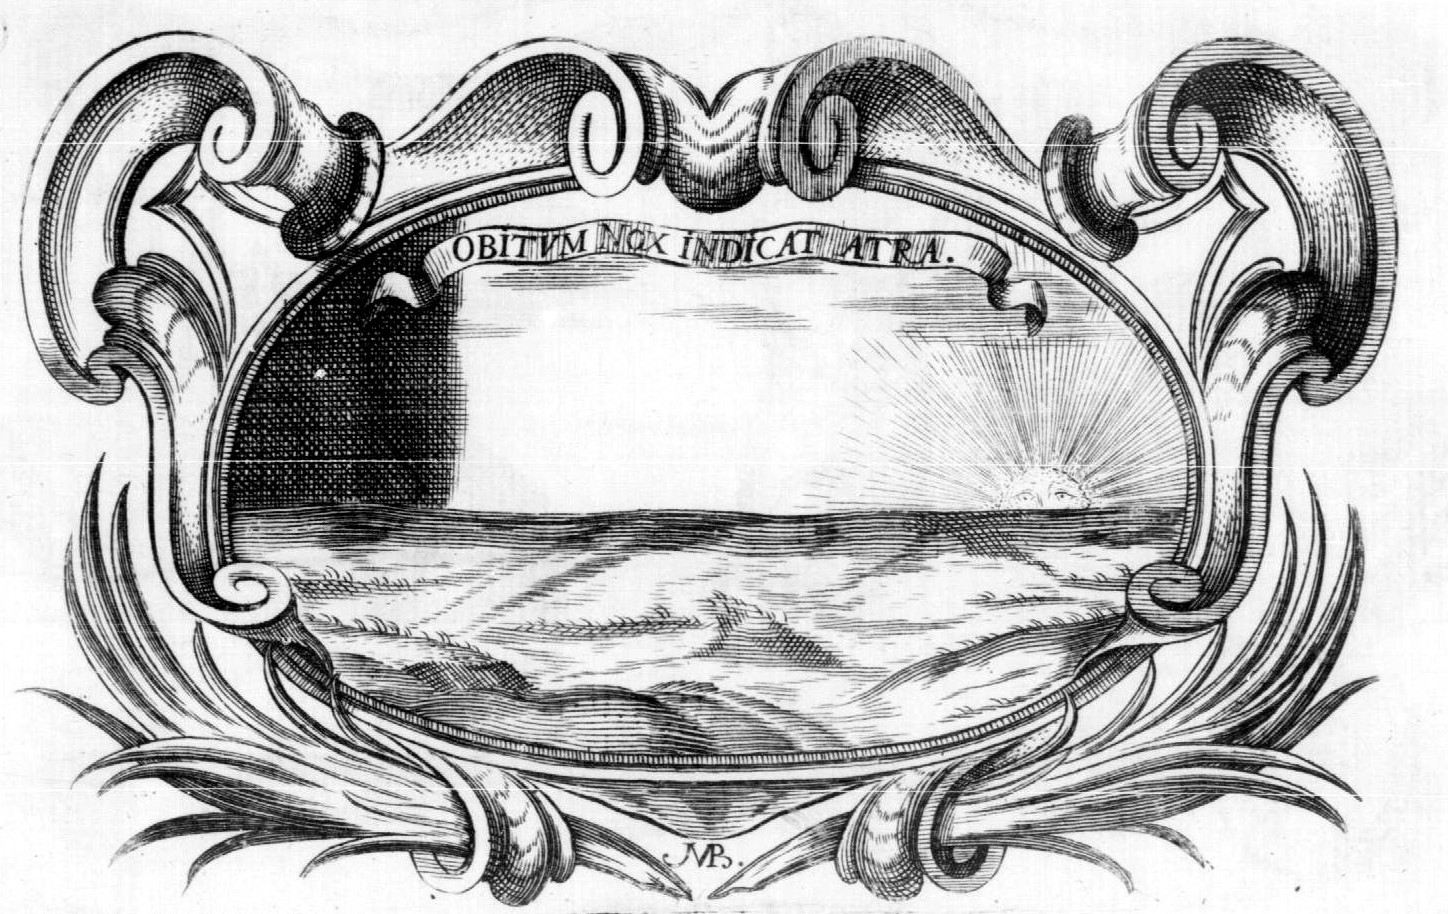 Obitum nox indicat atra. Jeroglífico. Exequias Felipe V. Cádiz